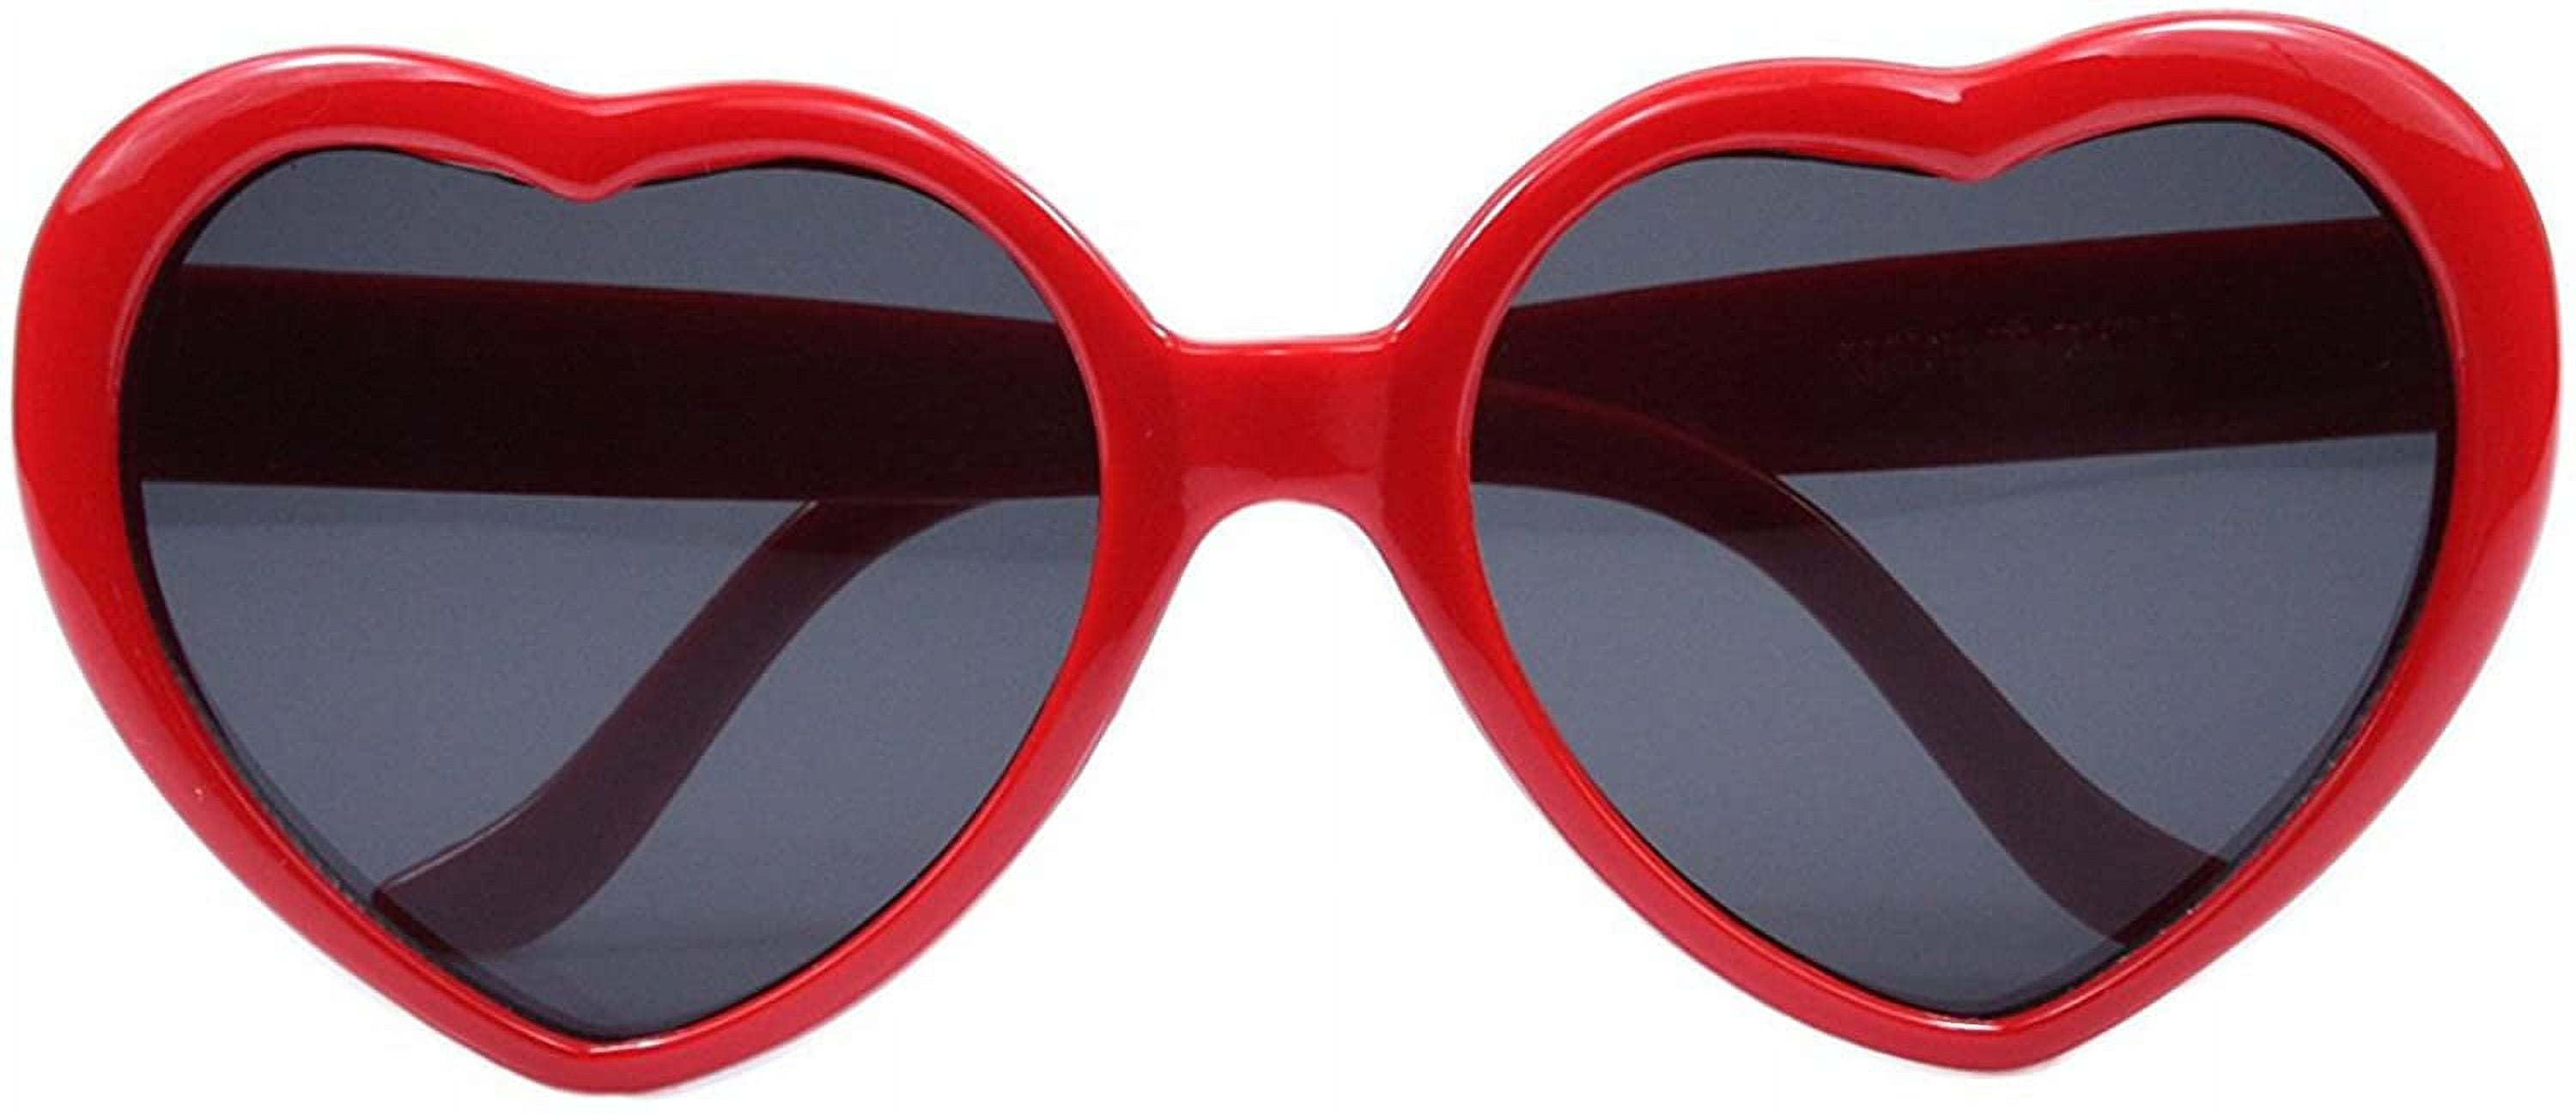 Buy Fashion Heart Oversized Rimless Sunglasses One Piece Heart Shape Eyewear  Colored Sunglasses for Women, Green, Medium at Amazon.in